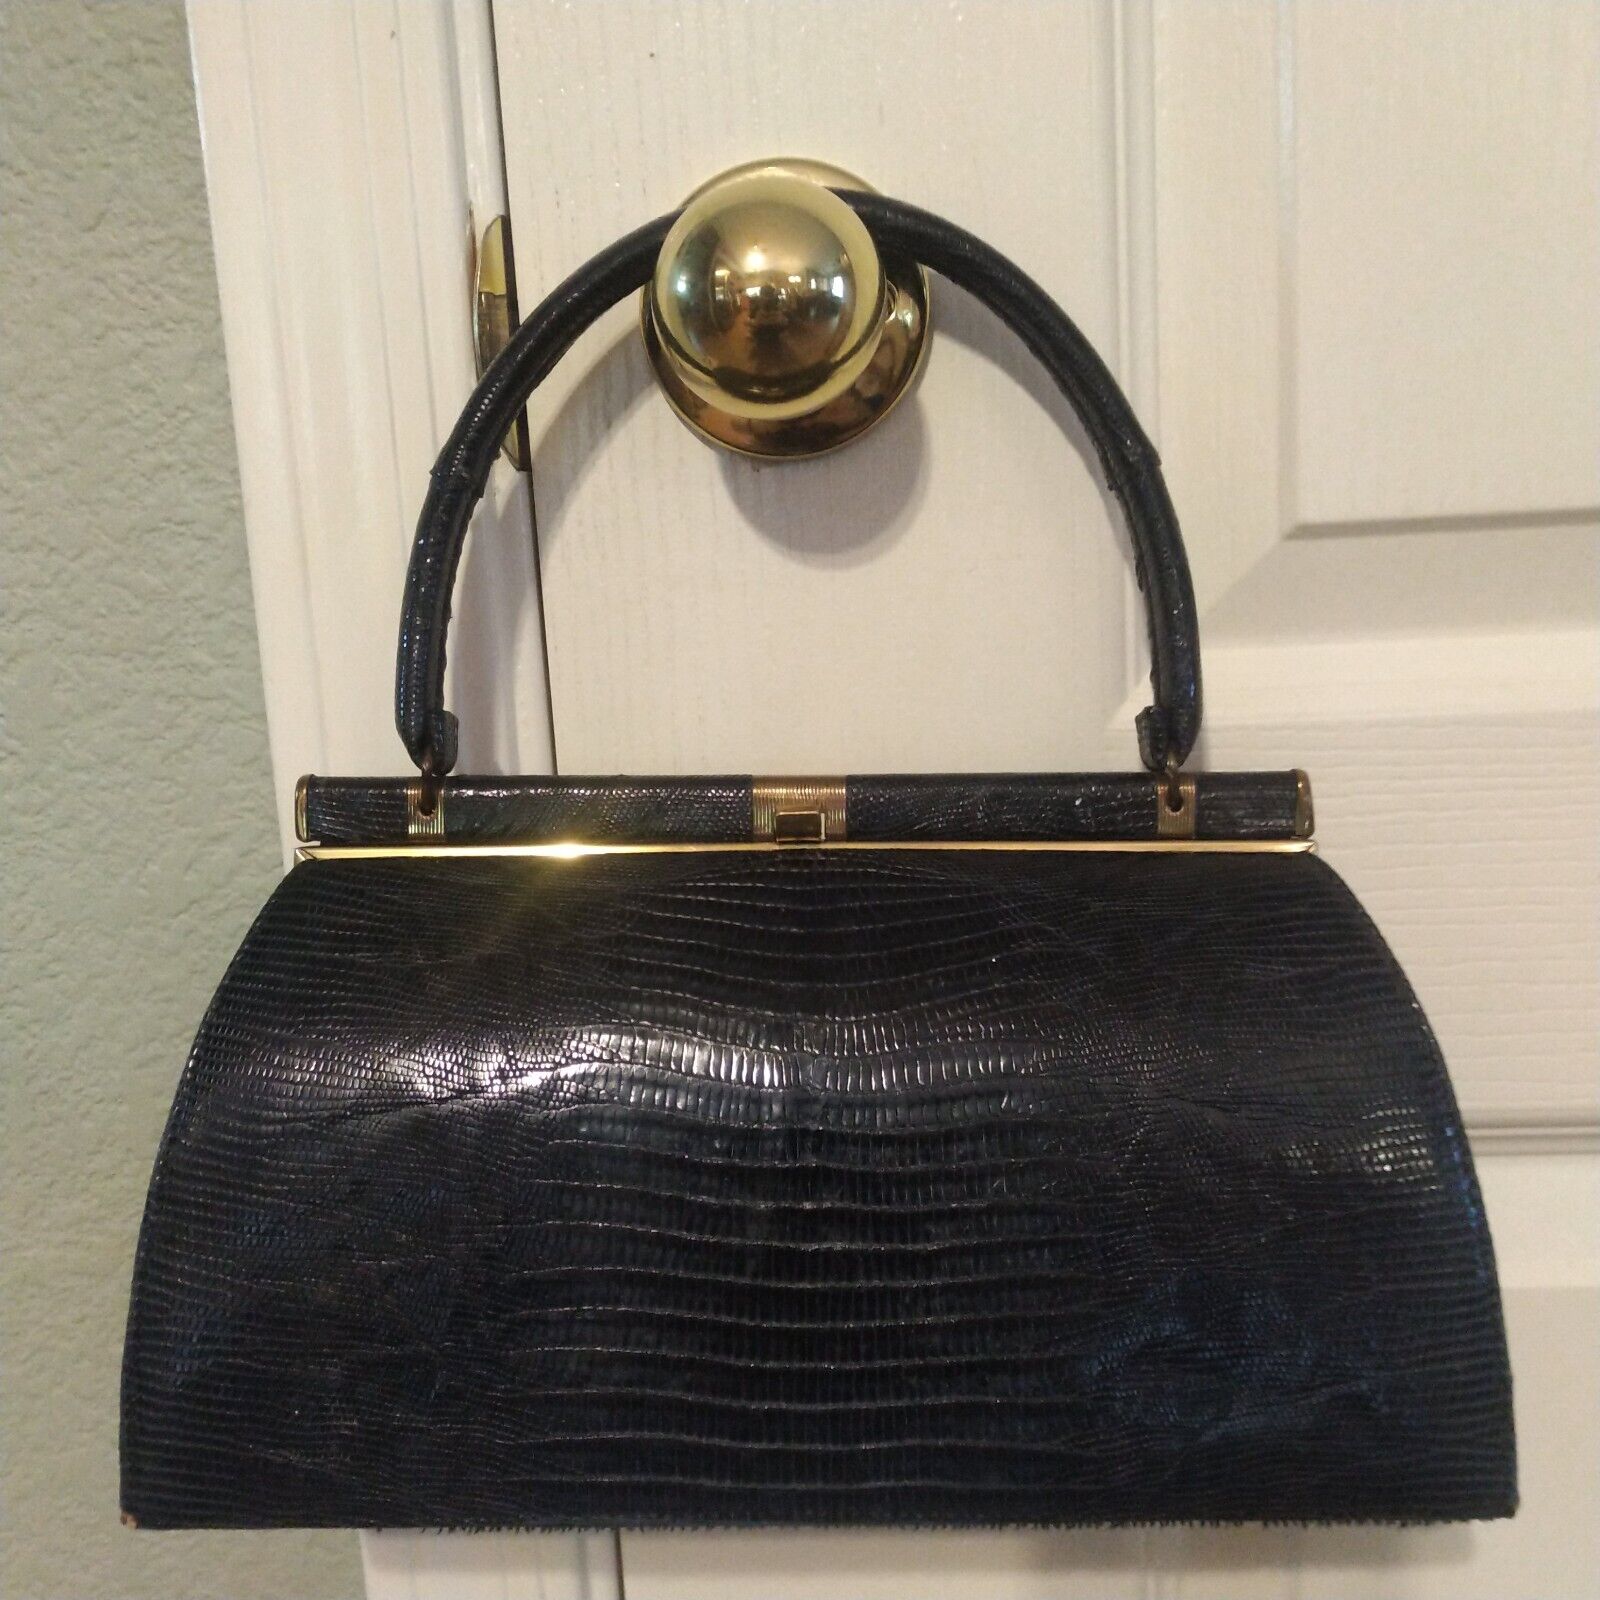 Vintage Bellestone Black Genuine Reptile Skin Leather Handbag w/ Gold Hardware